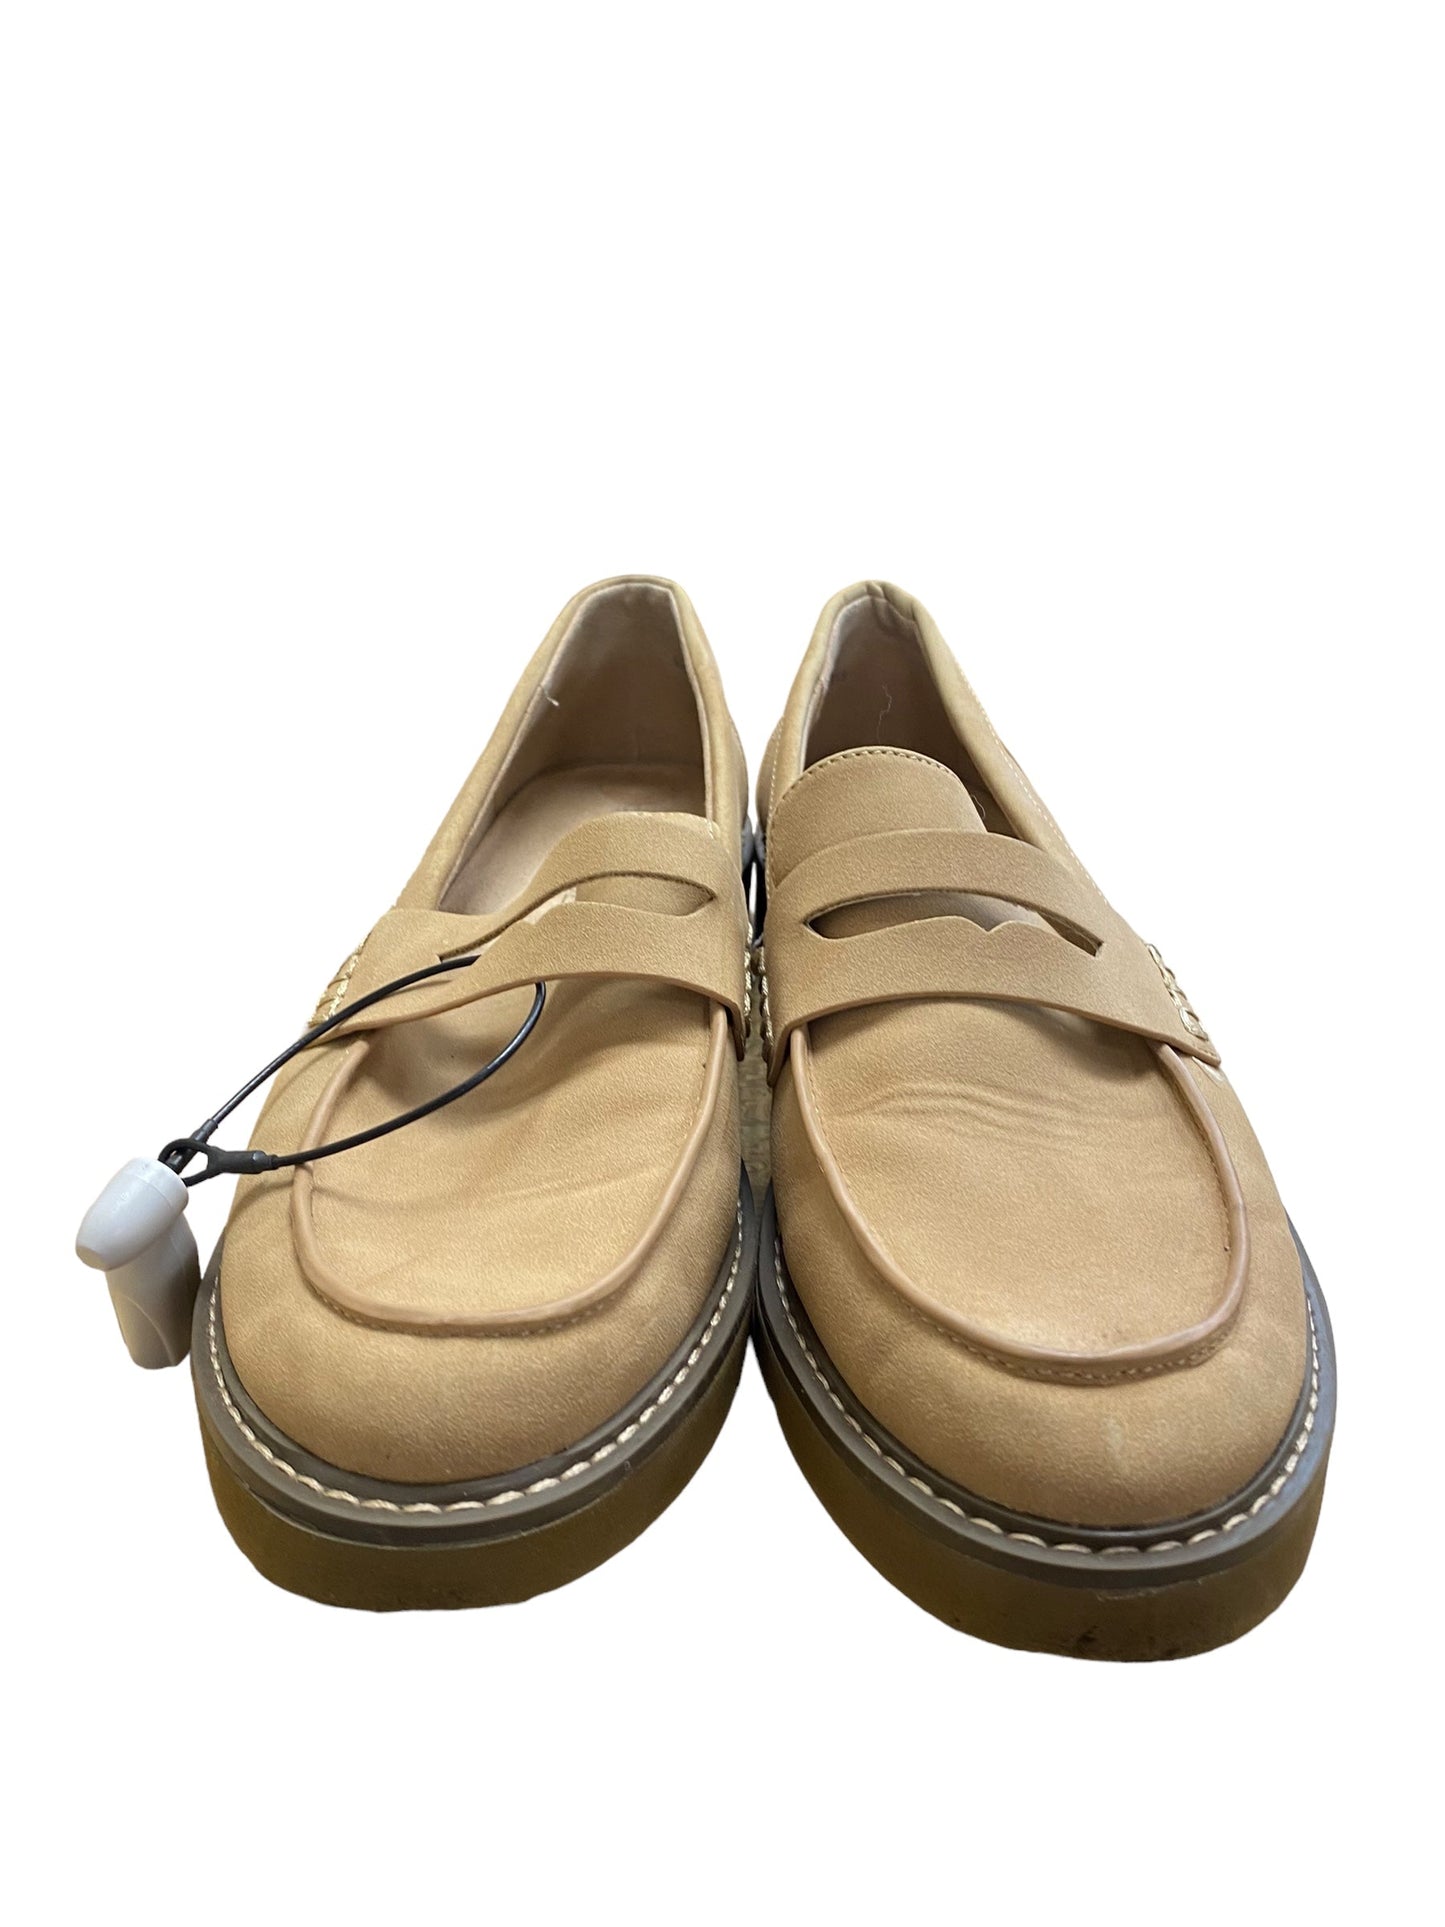 Tan Shoes Flats Rachel Zoe, Size 8.5